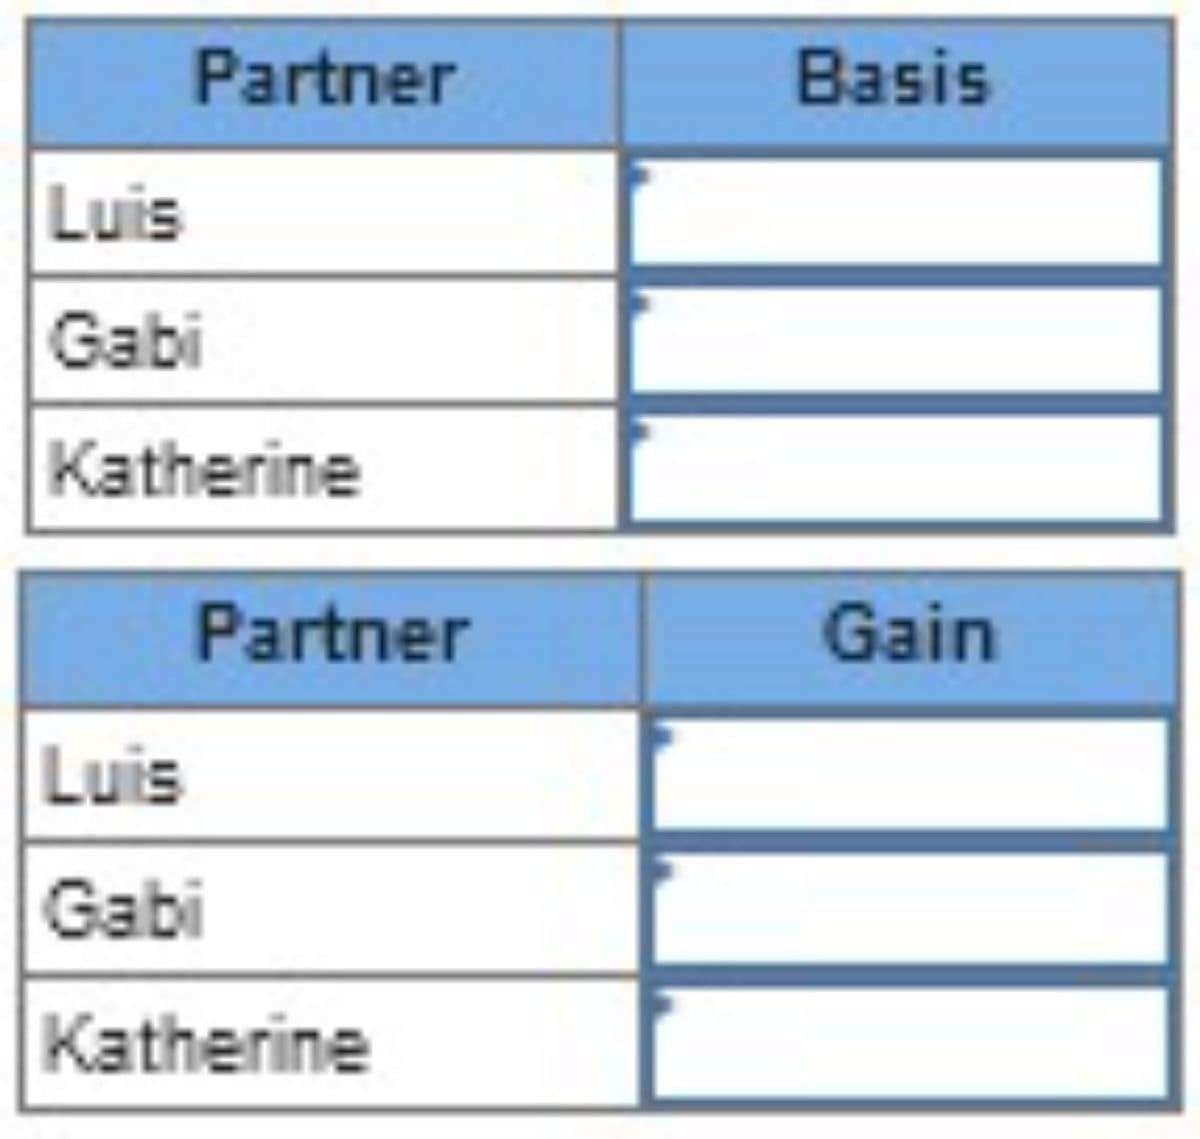 Luis
Gabi
Partner
Basis
Katherine
Partner
Gain
Luis
Gabi
Katherine